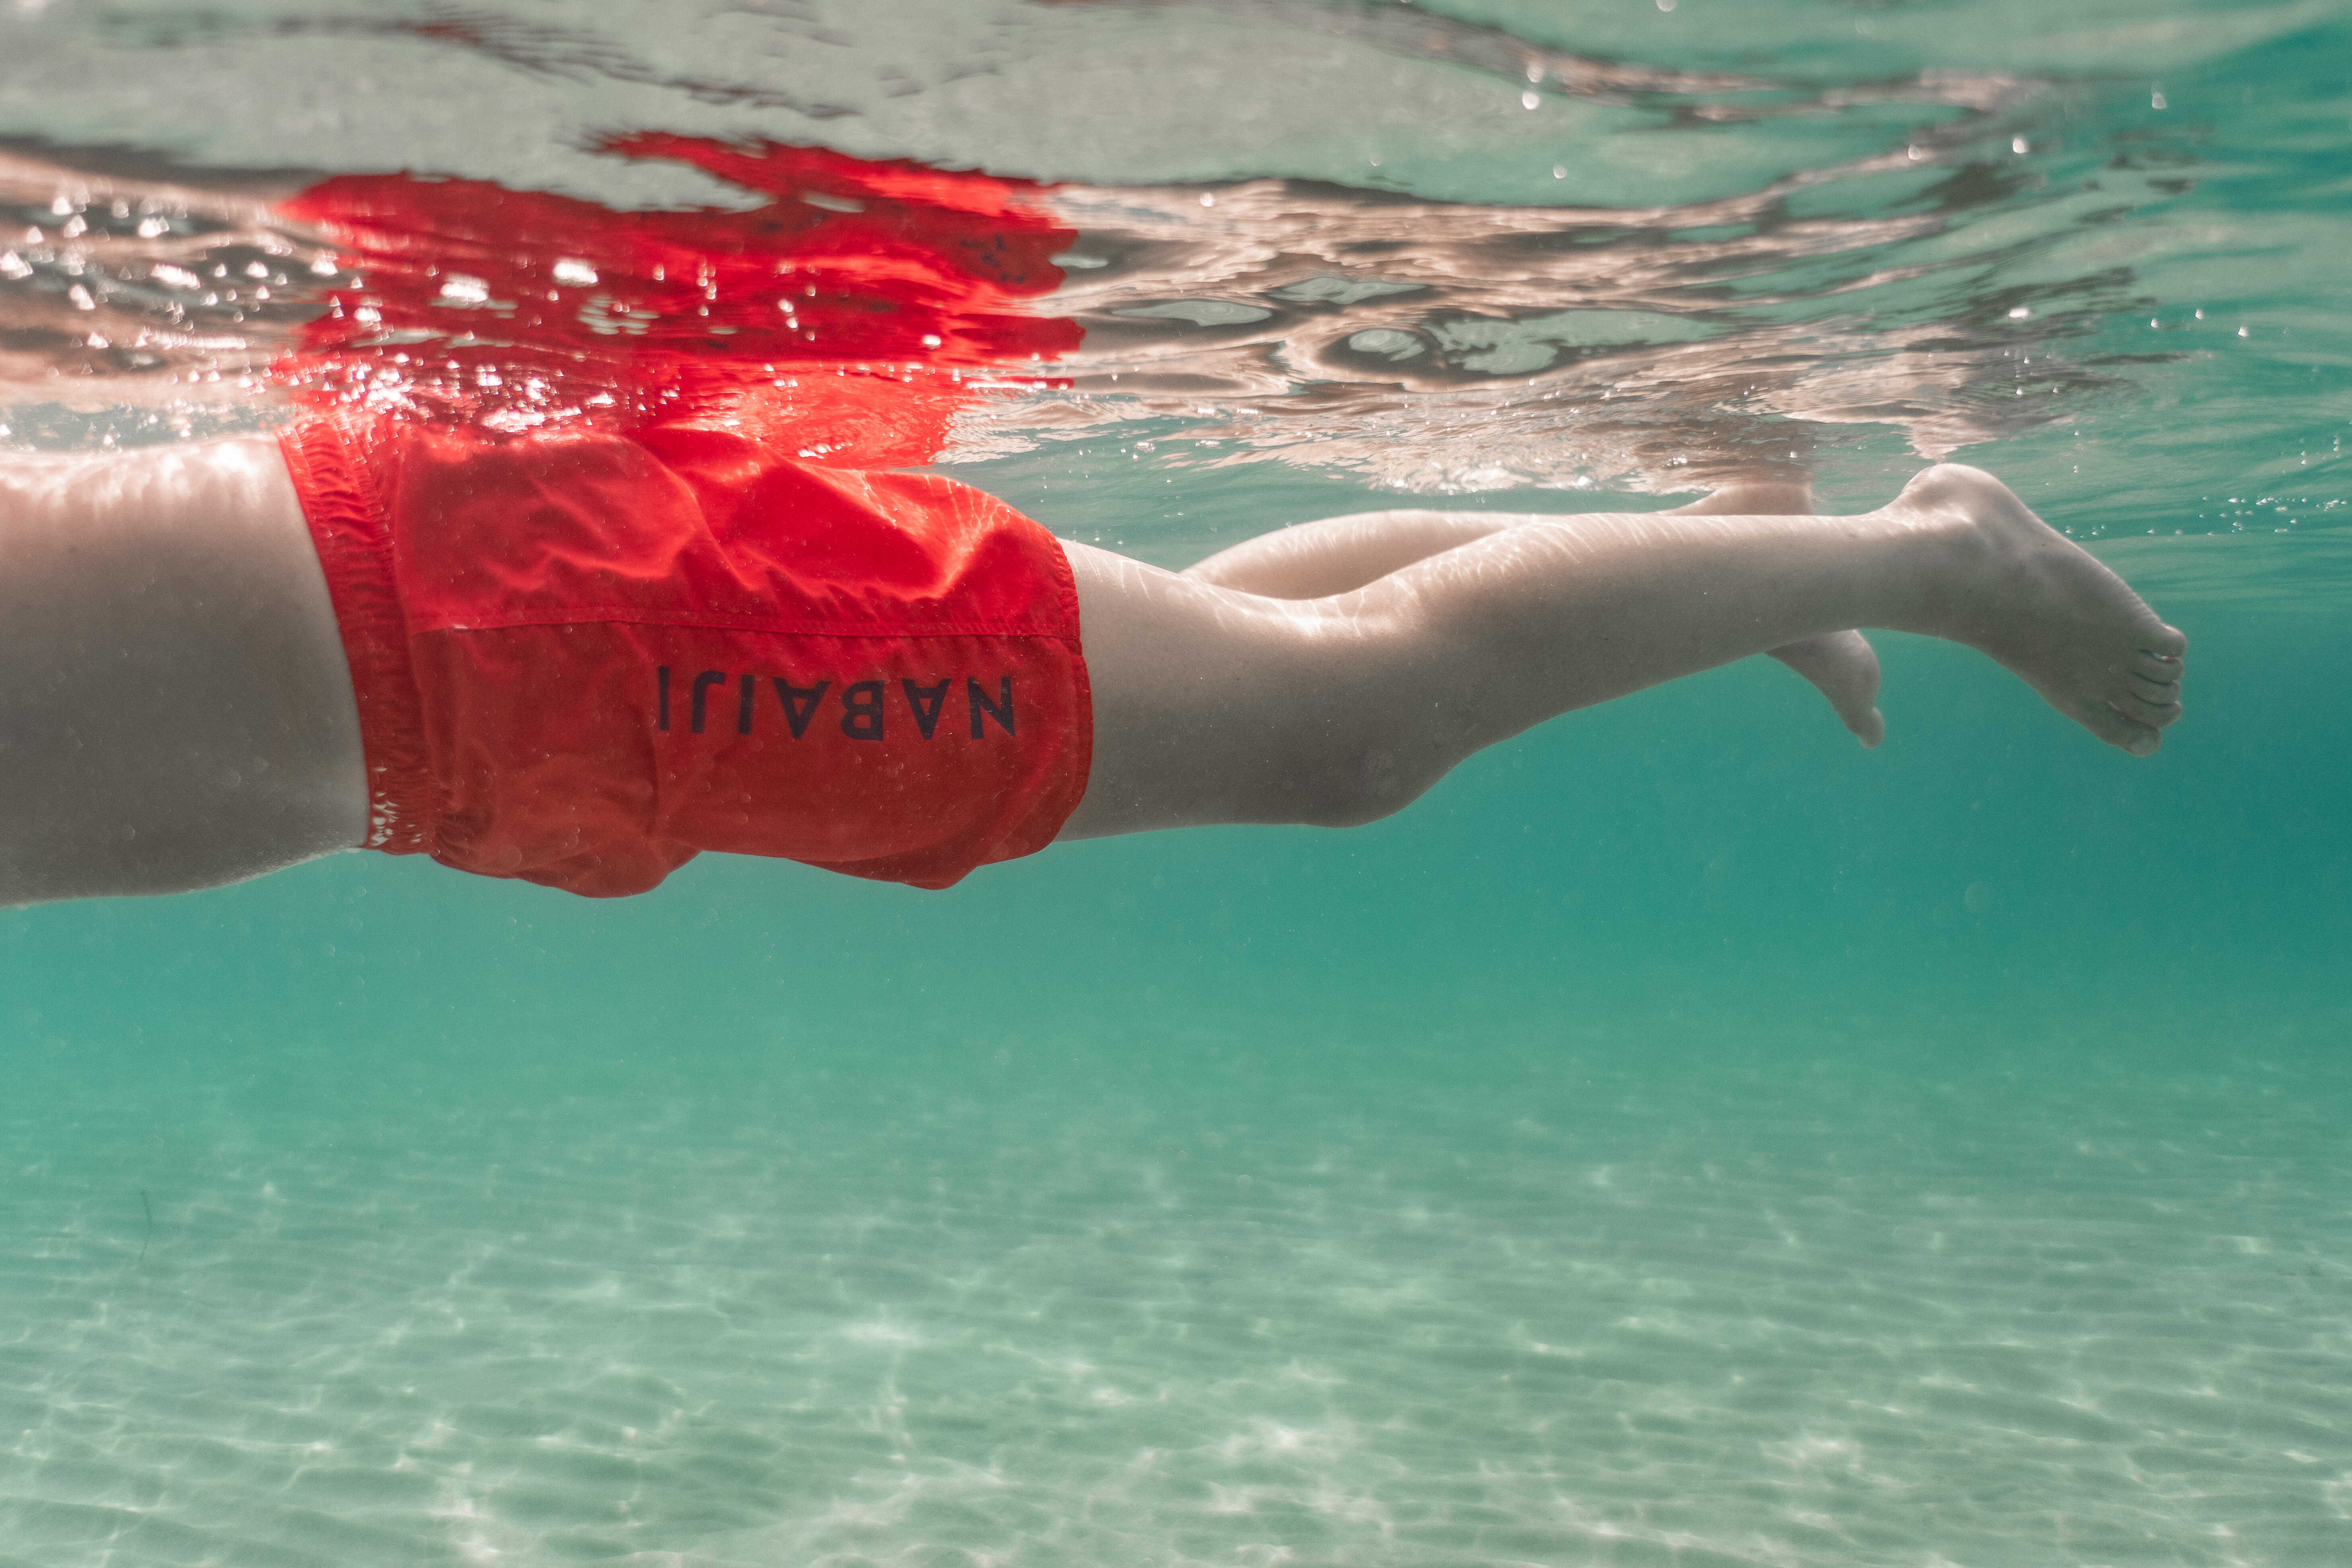 Swimming shorts - Swimshort 100 – Men - NABAIJI